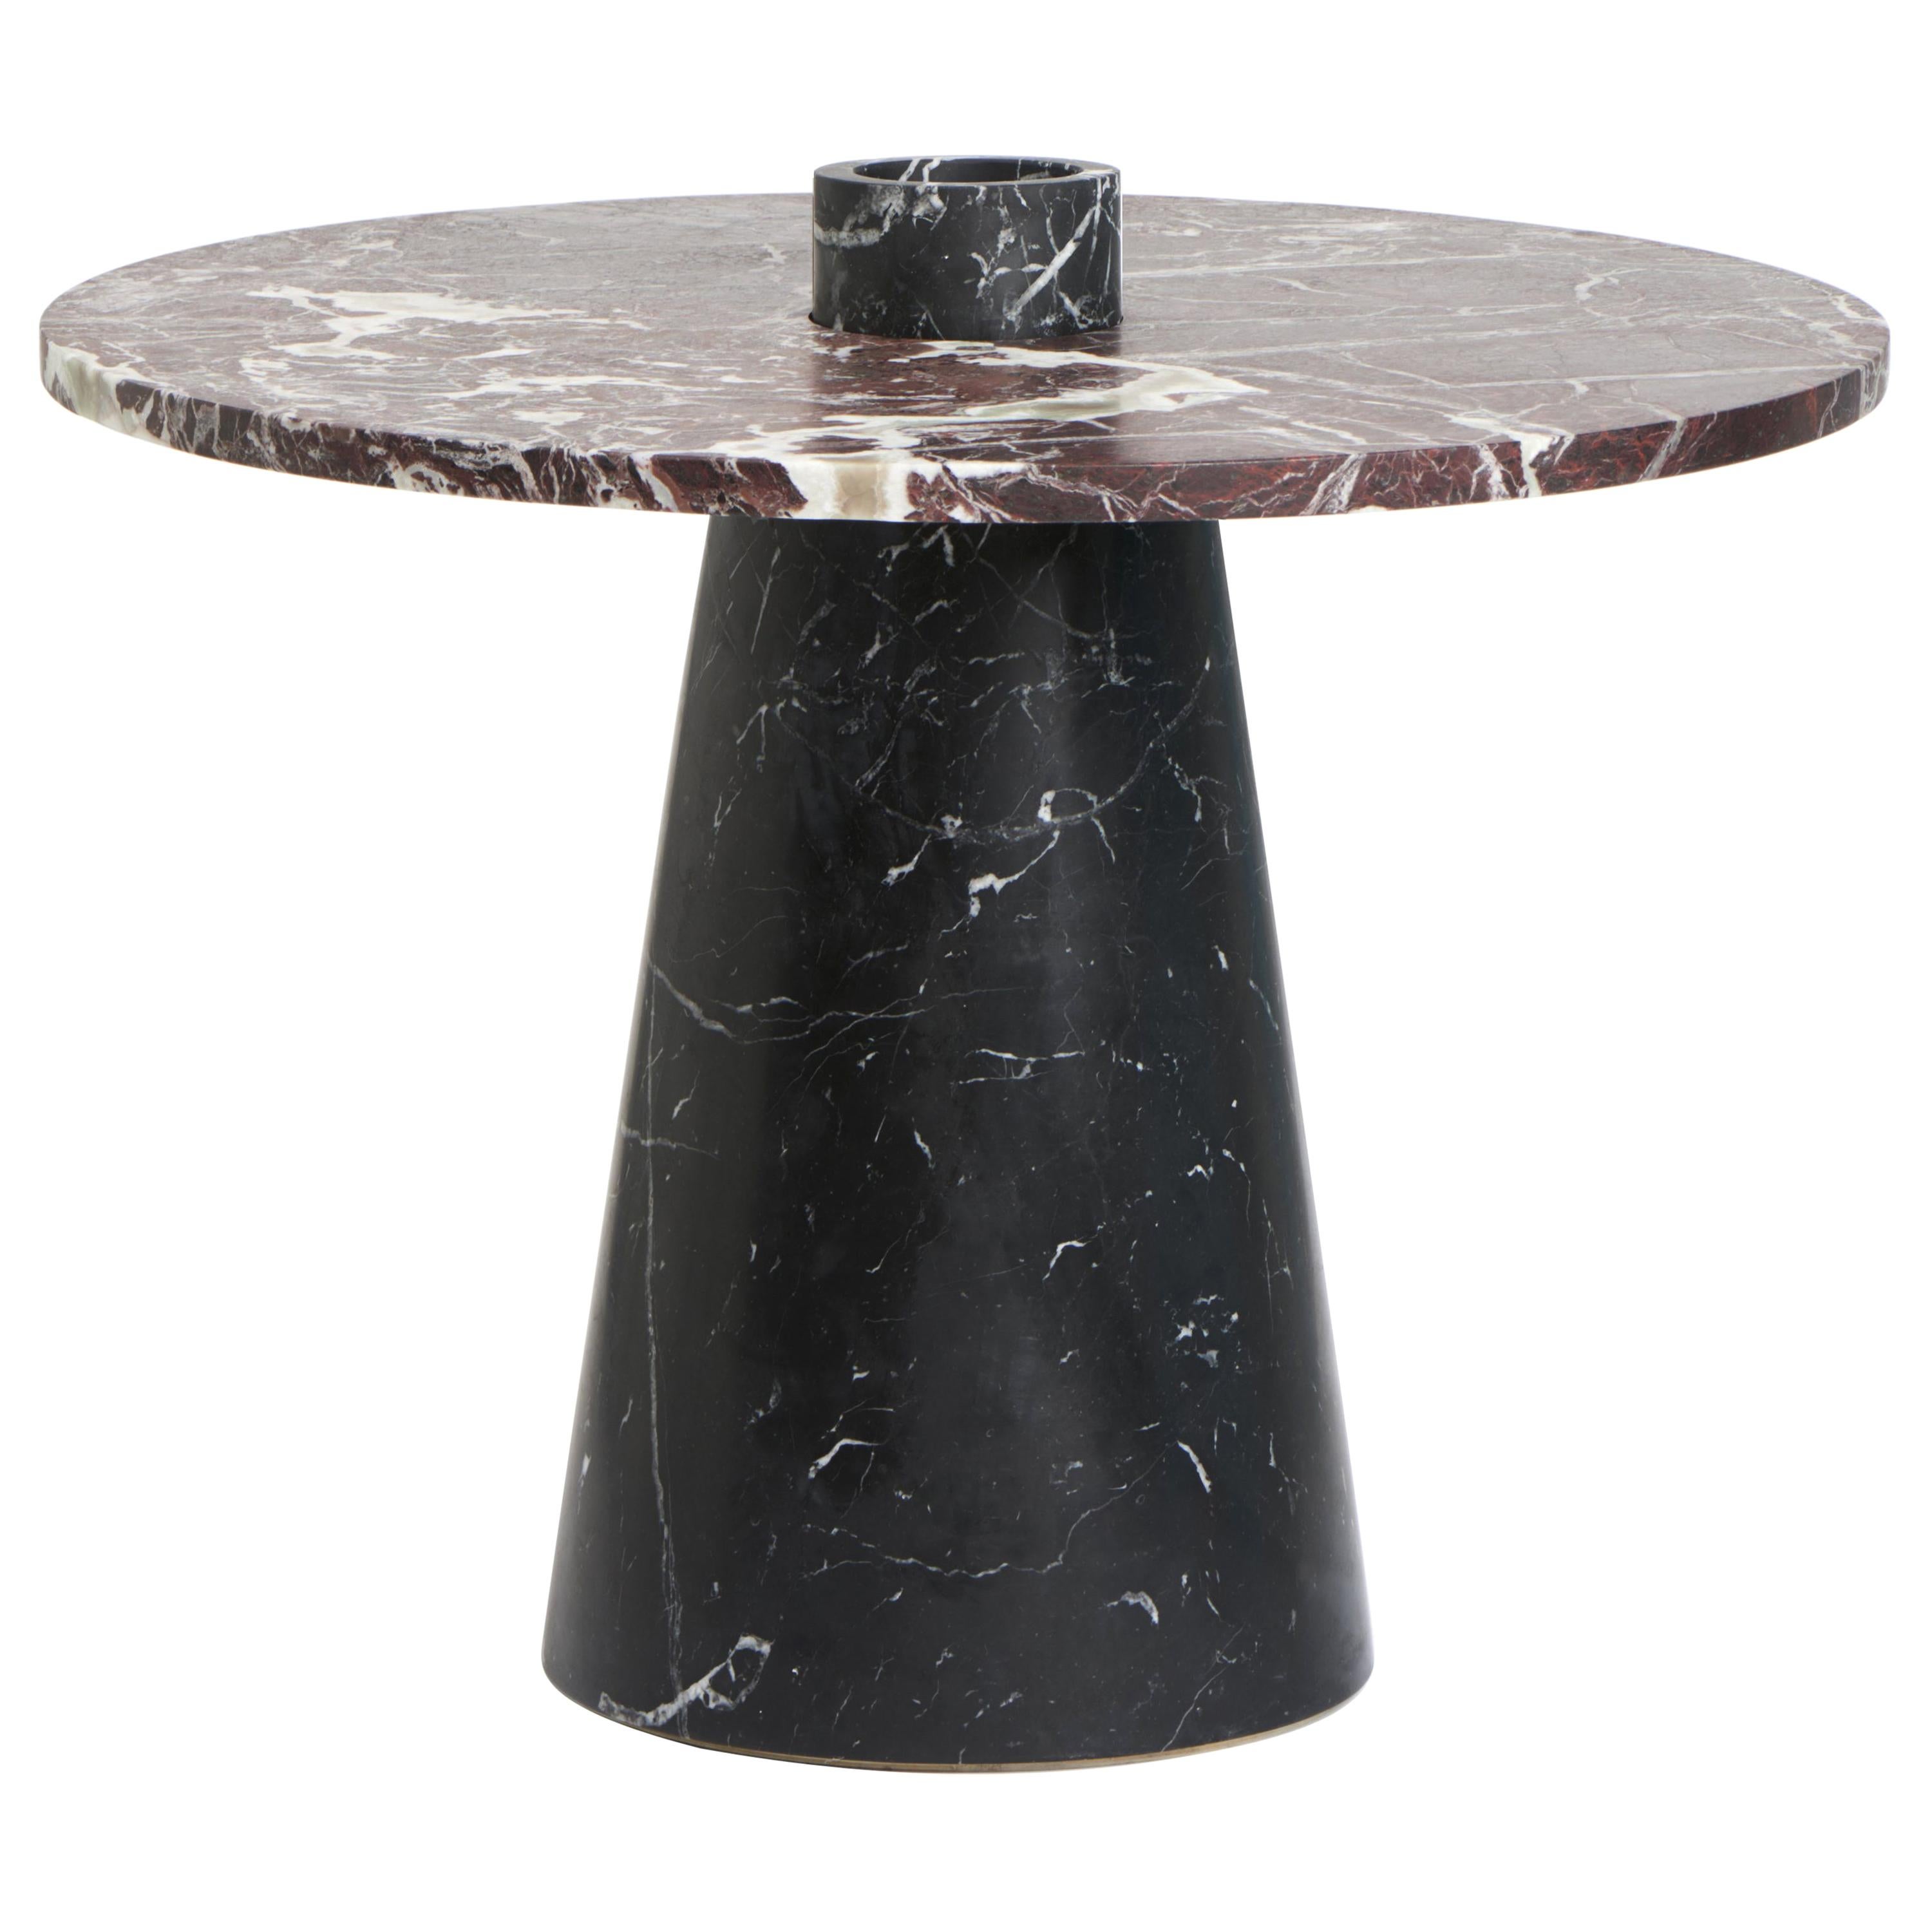 Table d'appoint moderne en marbre rouge et noir, de la créatrice Karen Chekerdjian, NEUF EN STOCK